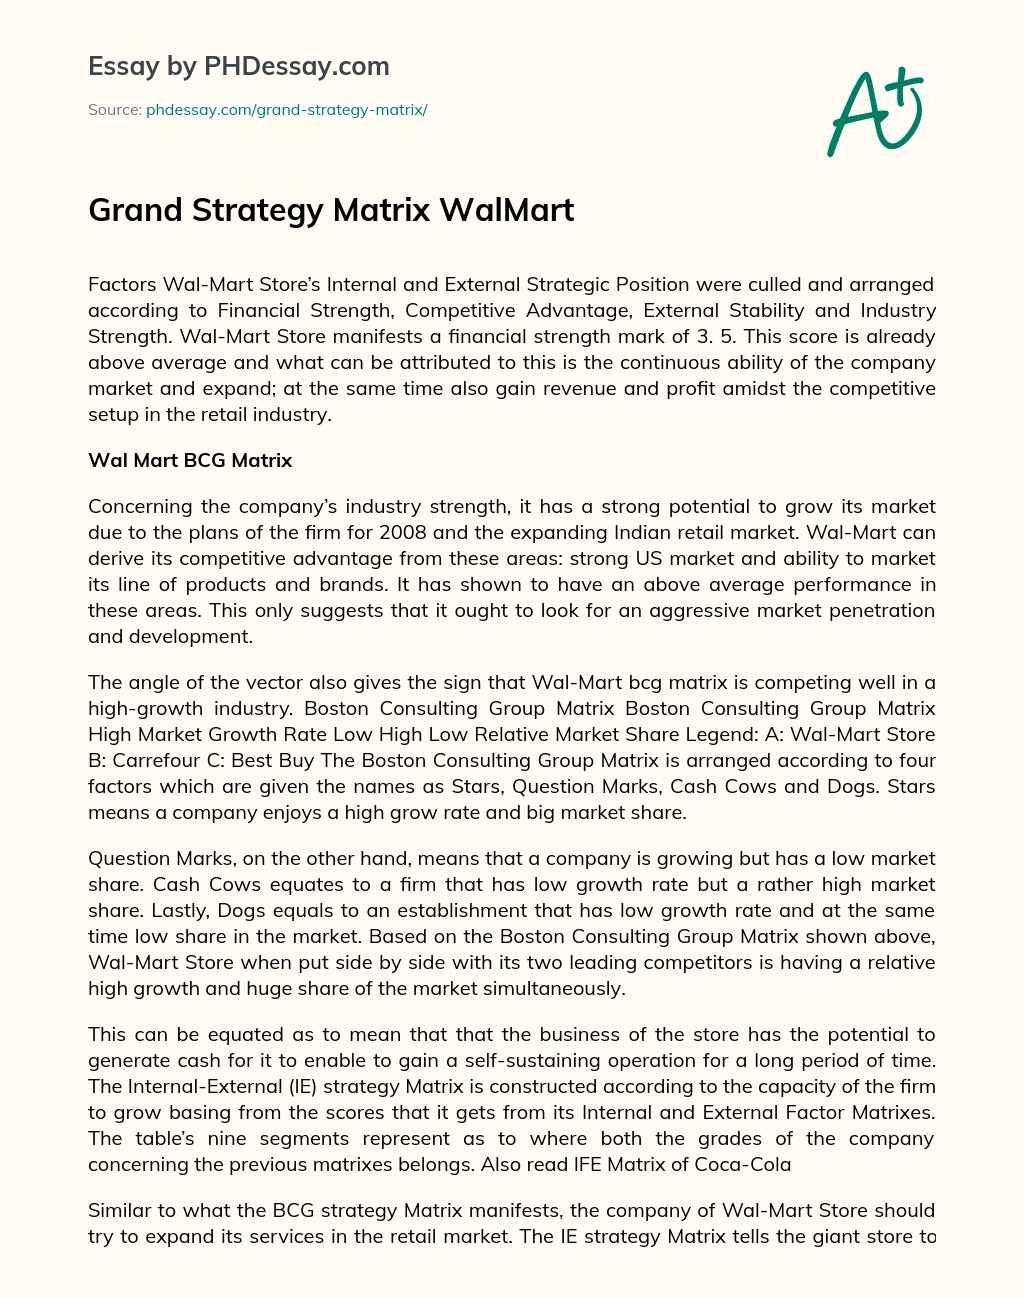 Grand Strategy Matrix WalMart essay